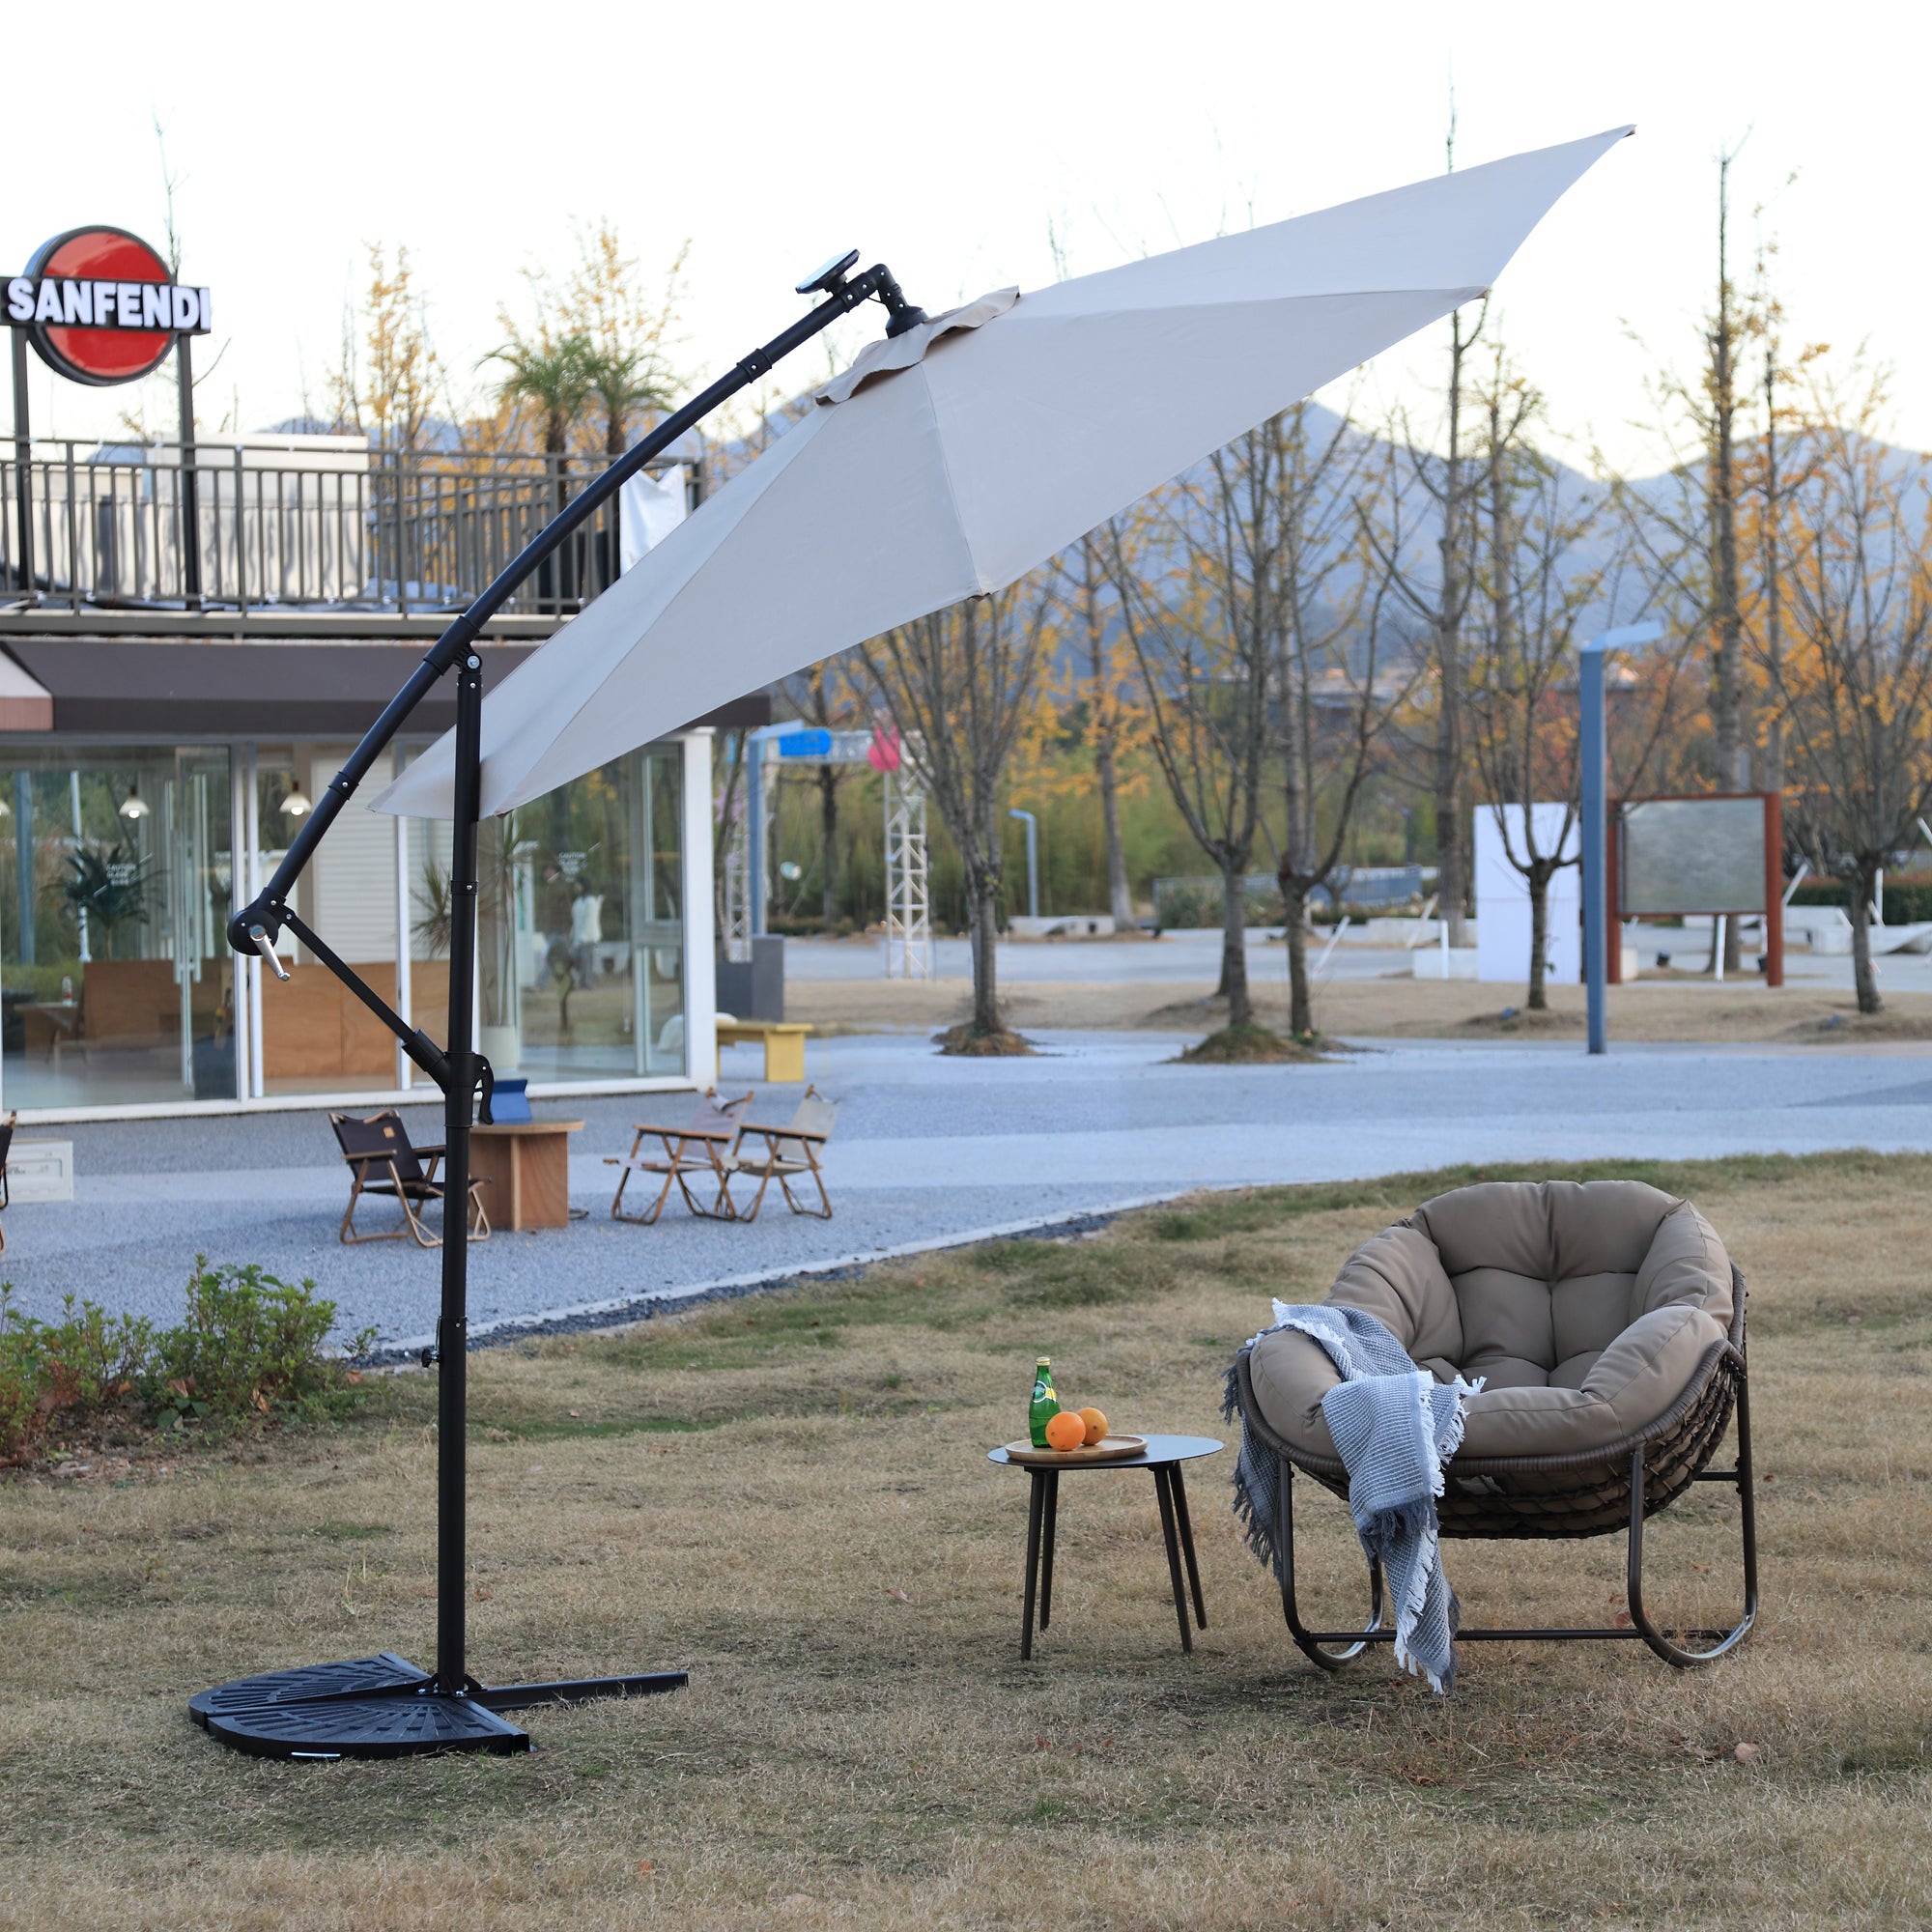 10 ft. Offset Hanging Outdoor Market Umbrella with Solar LED BOHFPU02KH